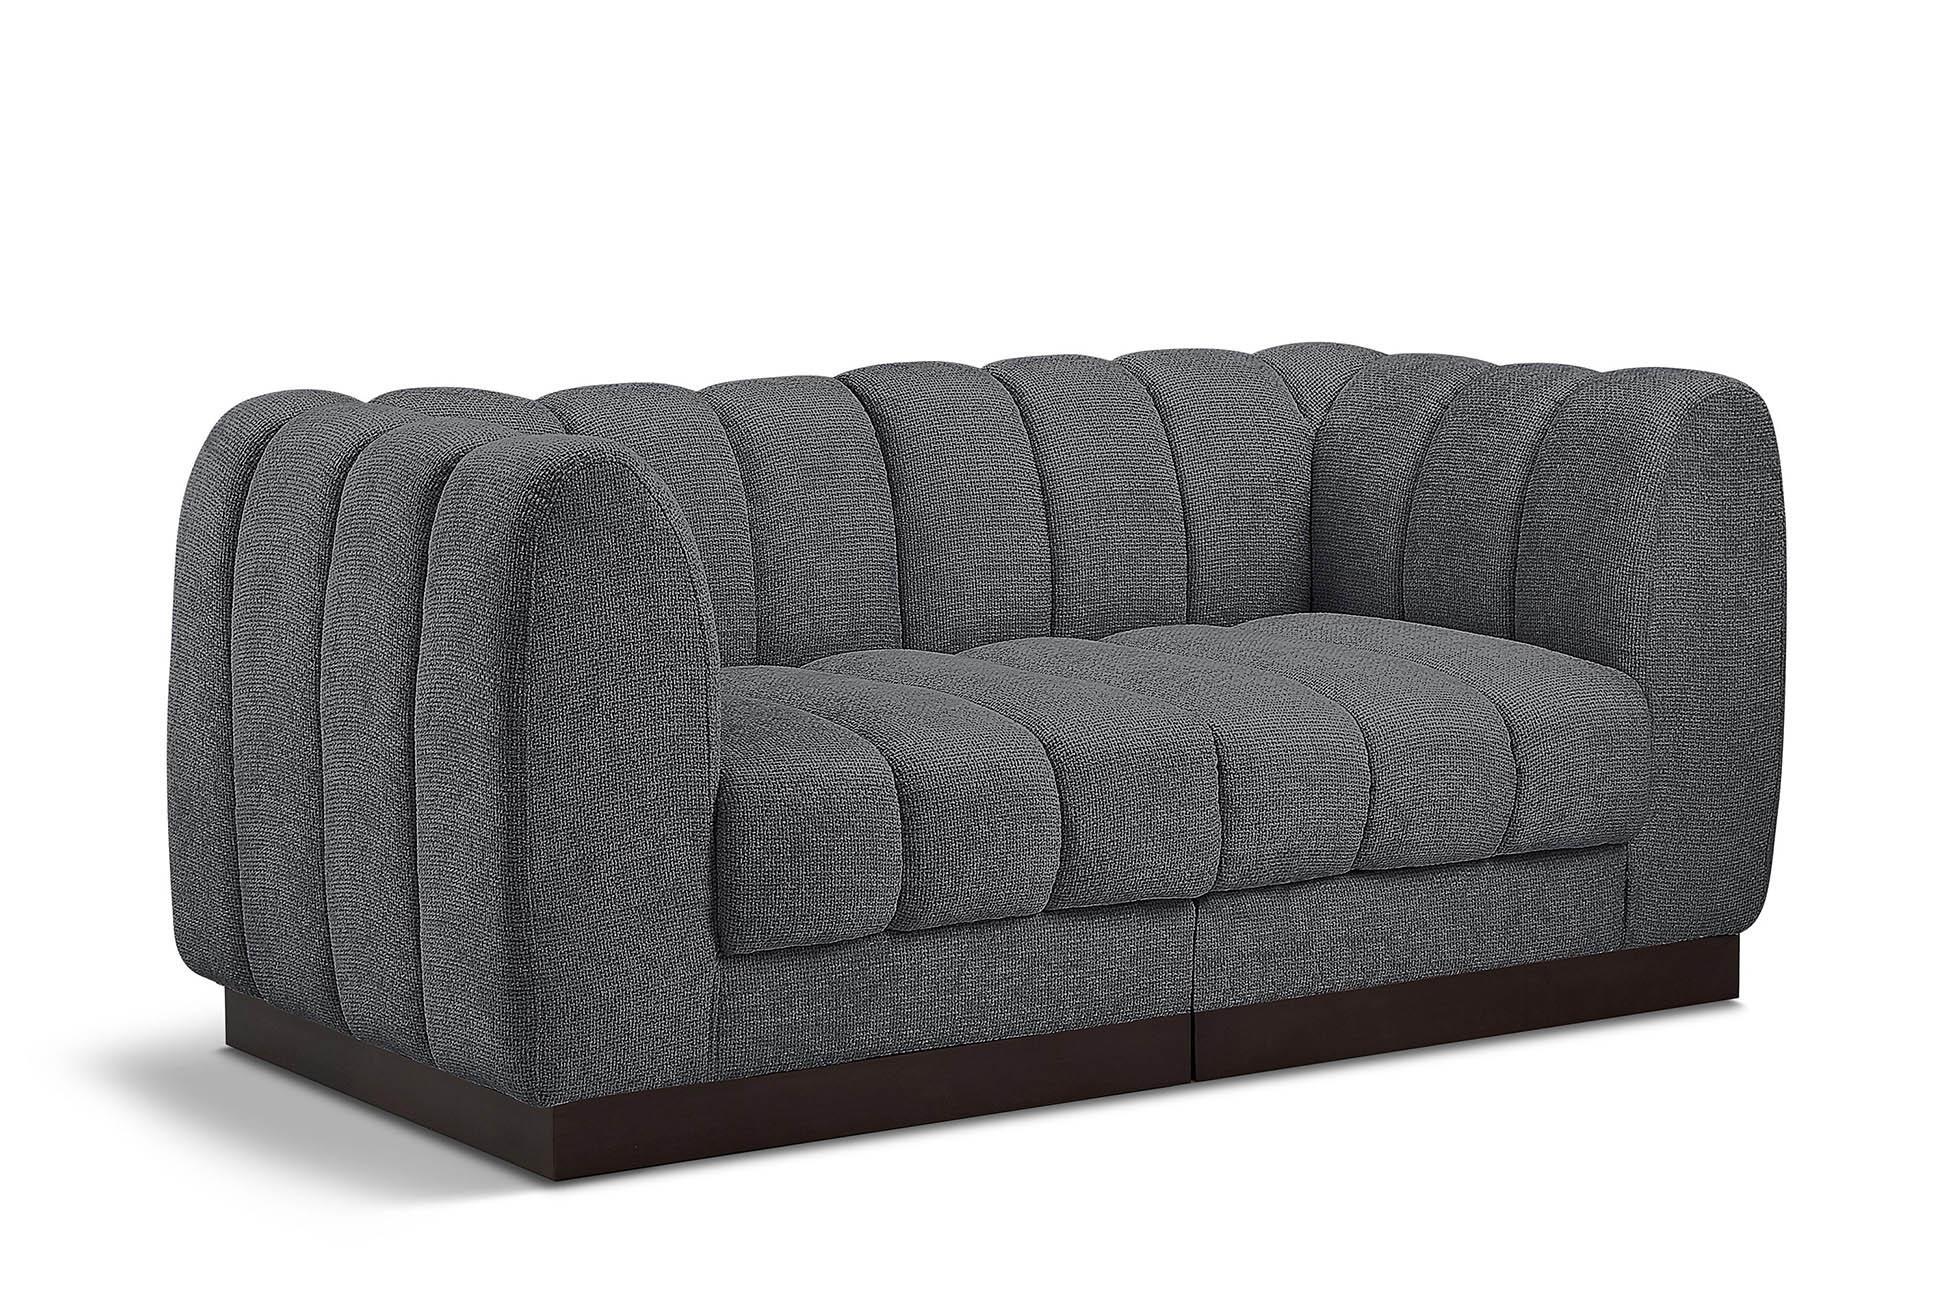 Contemporary, Modern Modular Sofa QUINN 124Grey-S69 124Grey-S69 in Gray Chenille